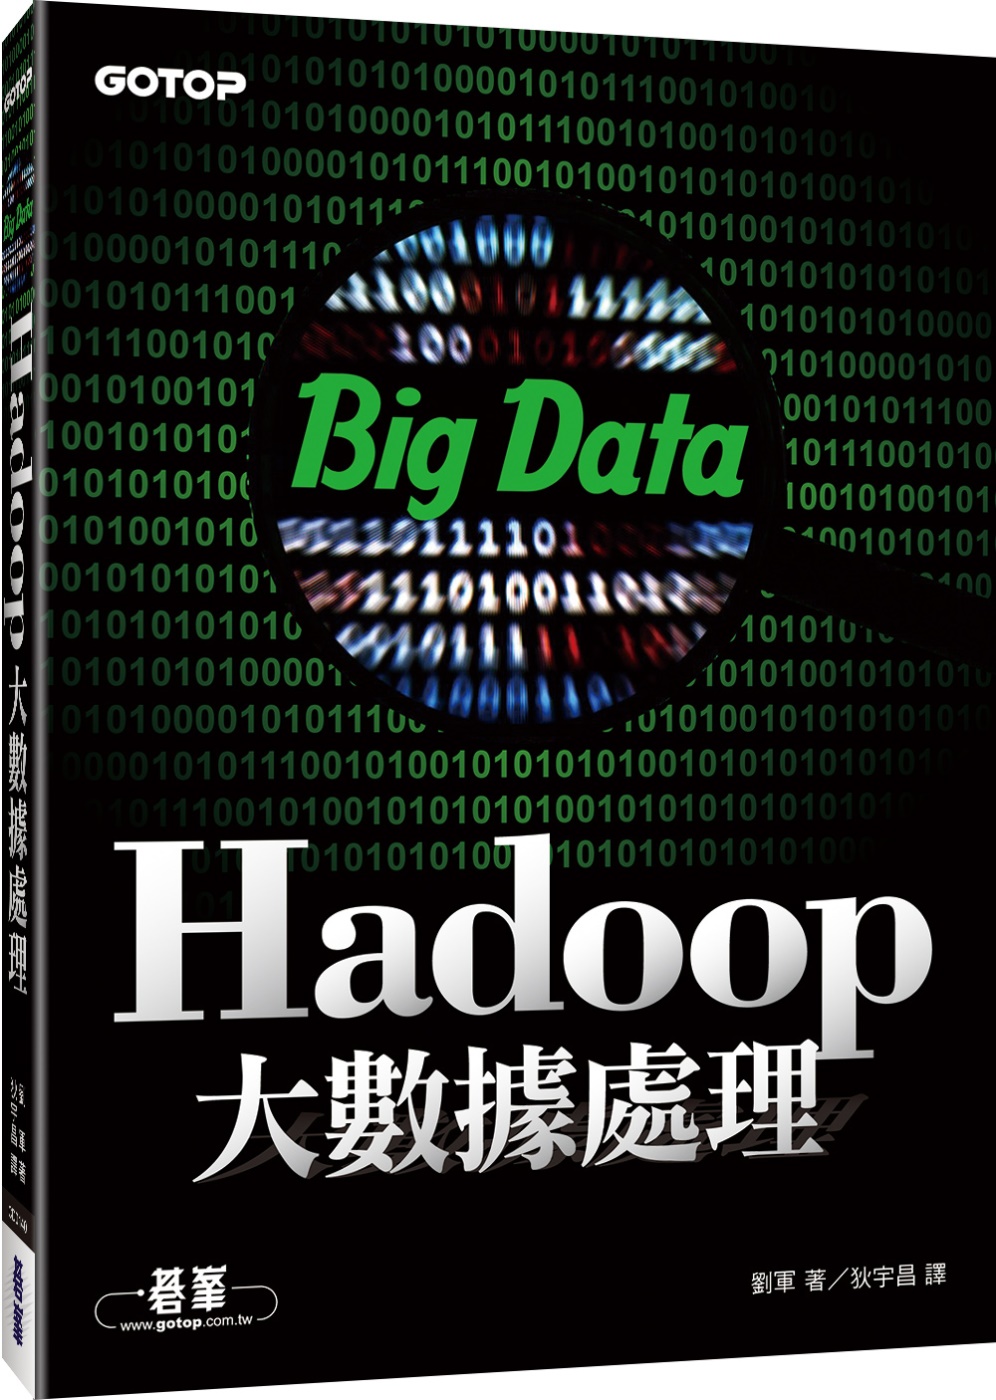 Hadoop大數據處理